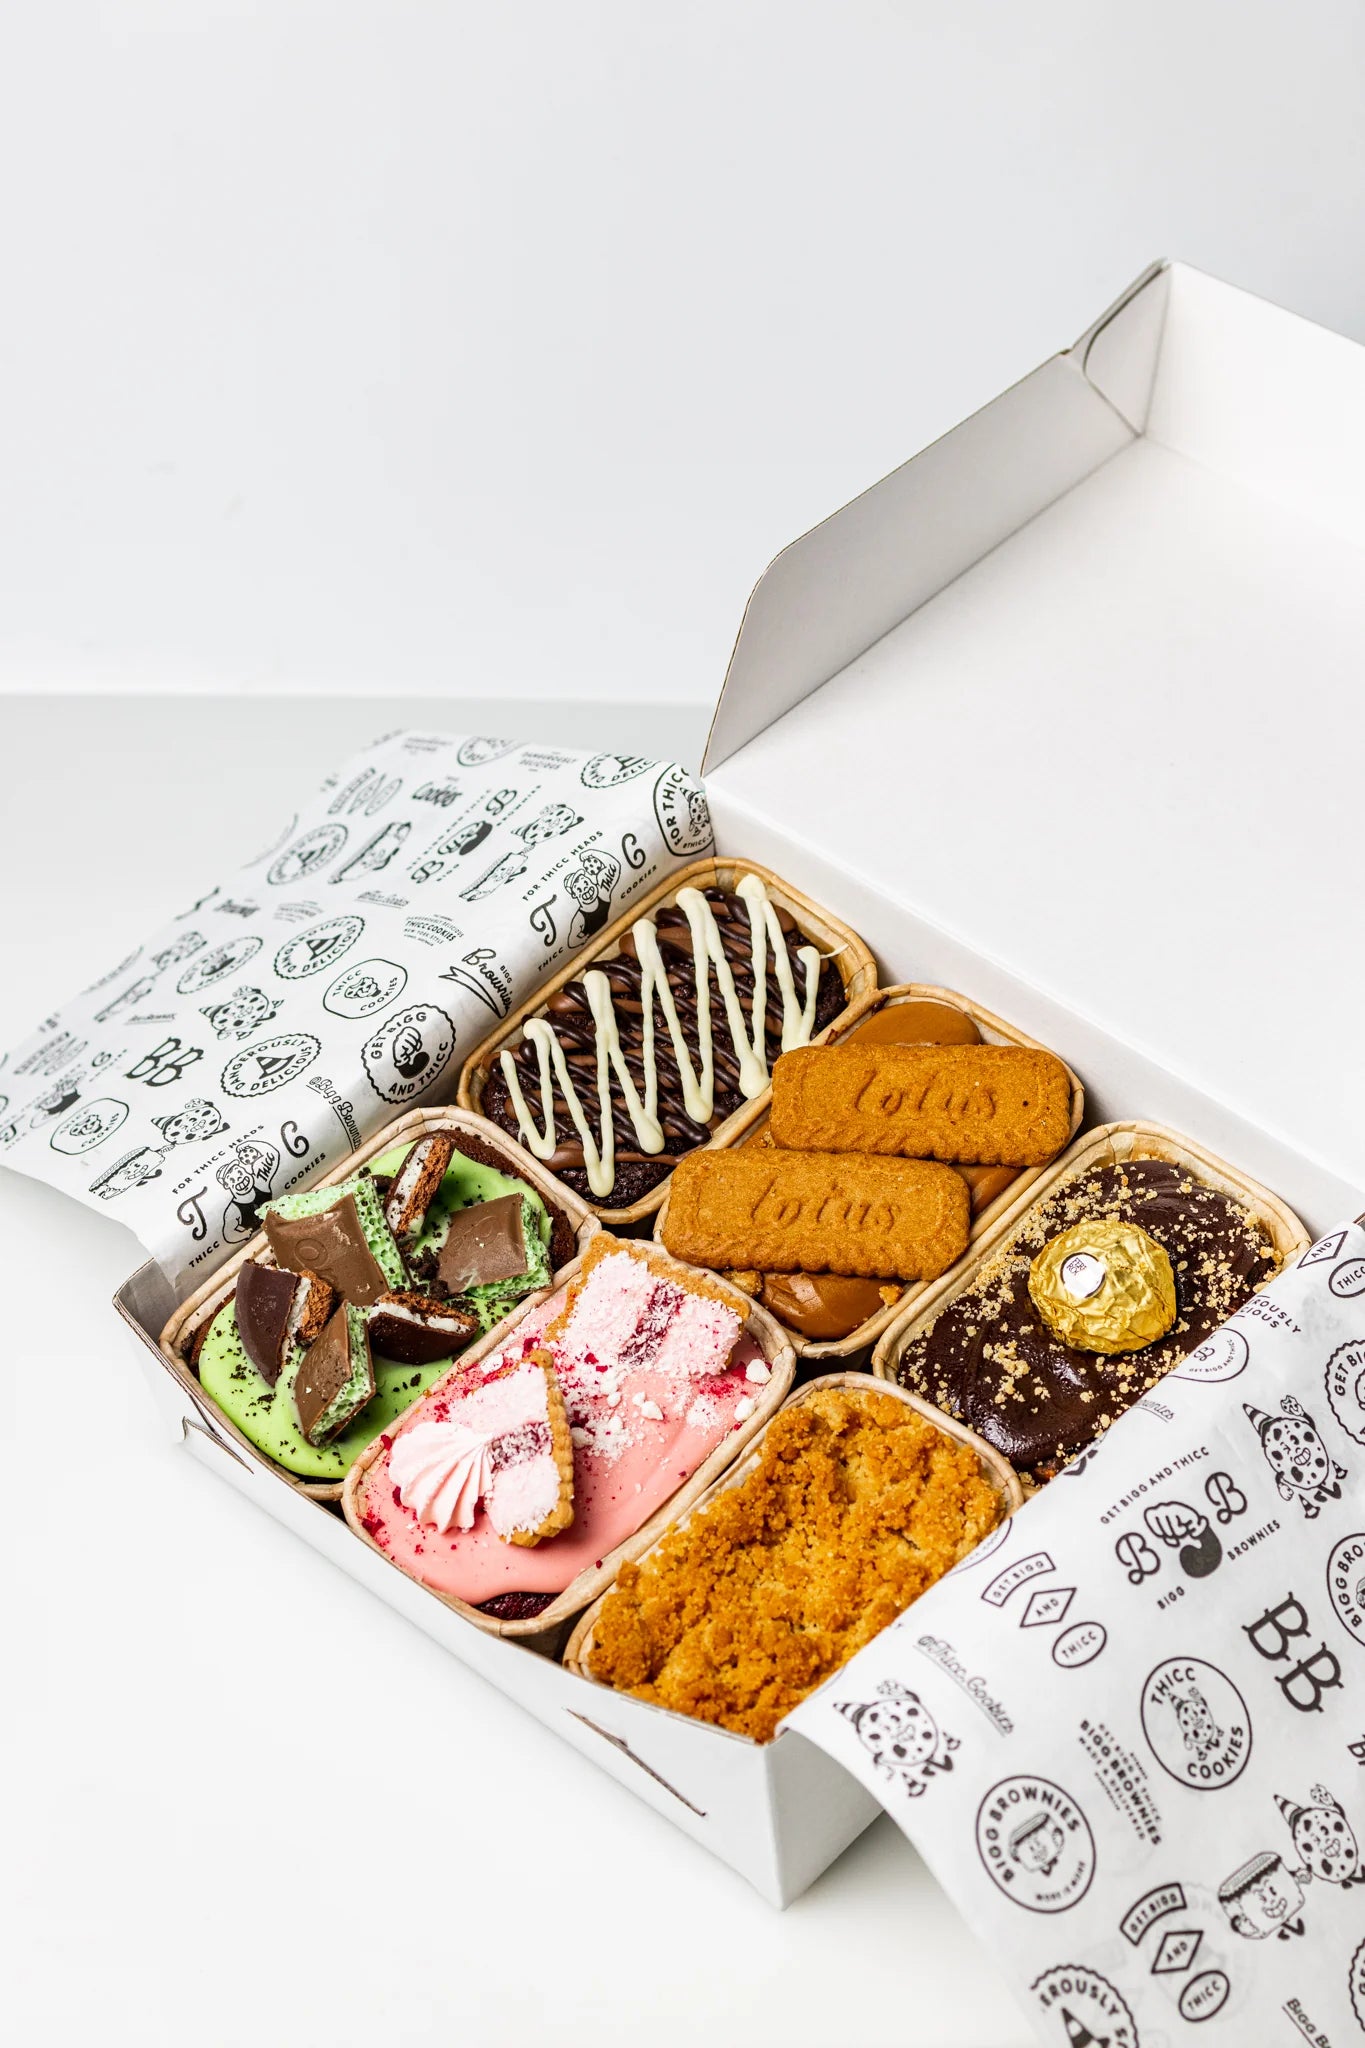 "thanks" Box- BIGG Brownies & THICC Cookies - New York Style Cookies